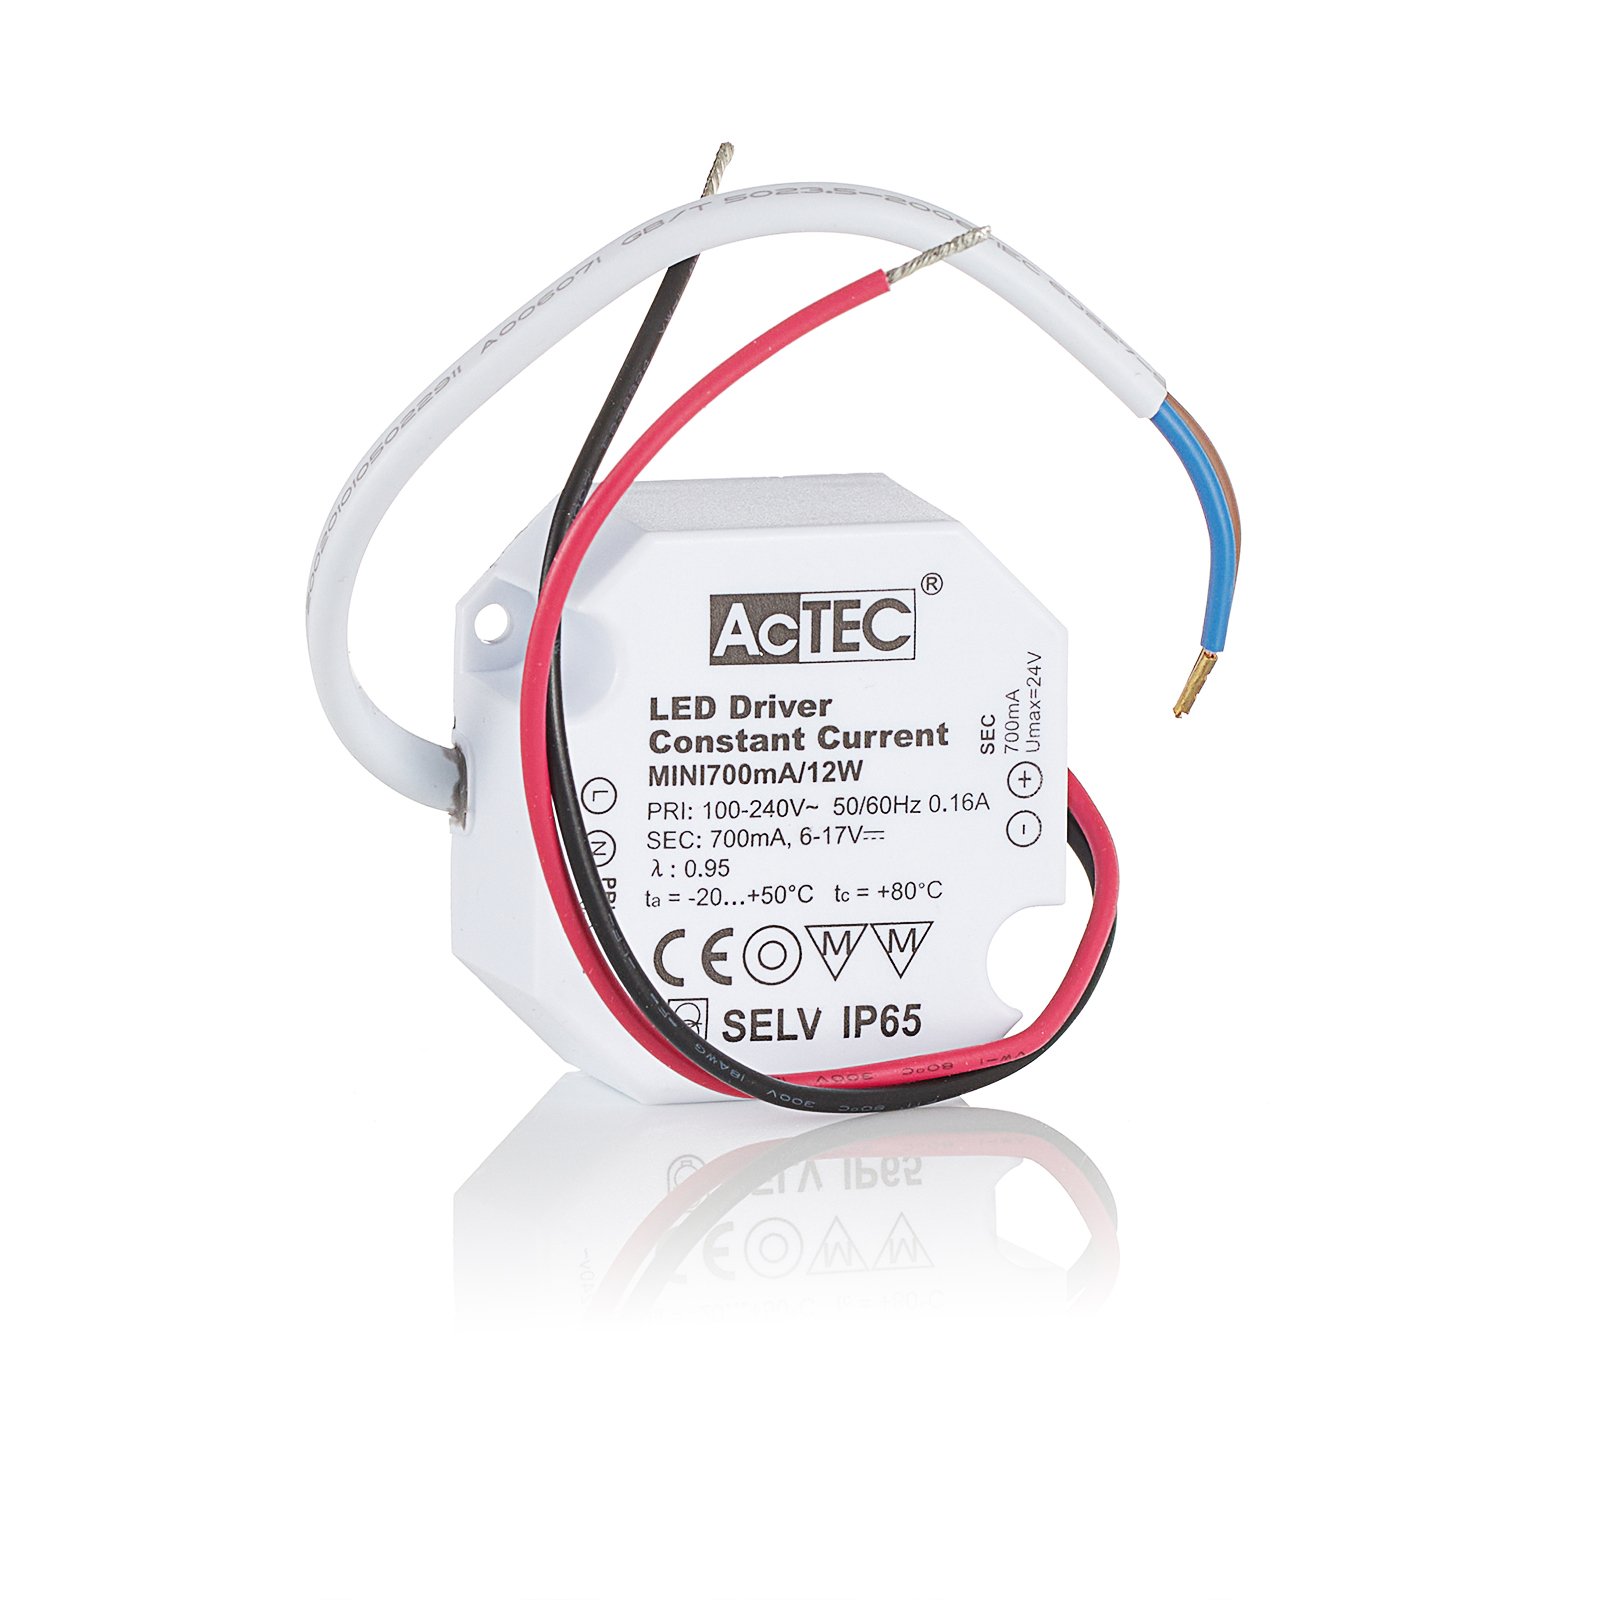 AcTEC Mini driver LED CC 700mA, 12W, IP65